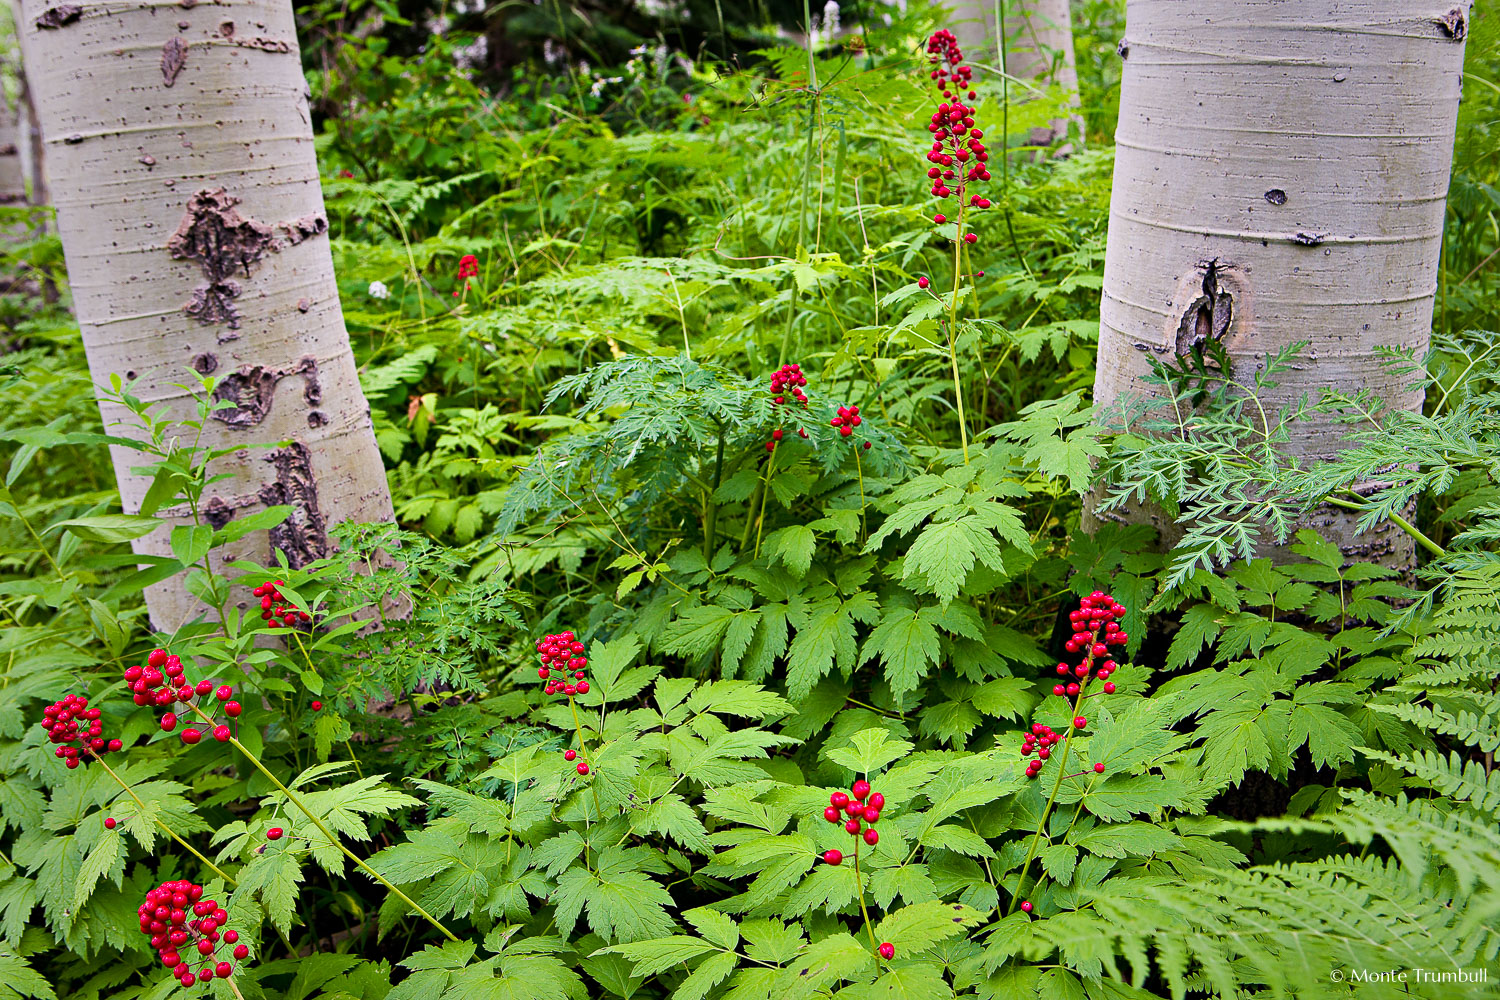 MT-20080805-130543-0062-Edit-Colorado-aspen-trunks-wild-berries.jpg